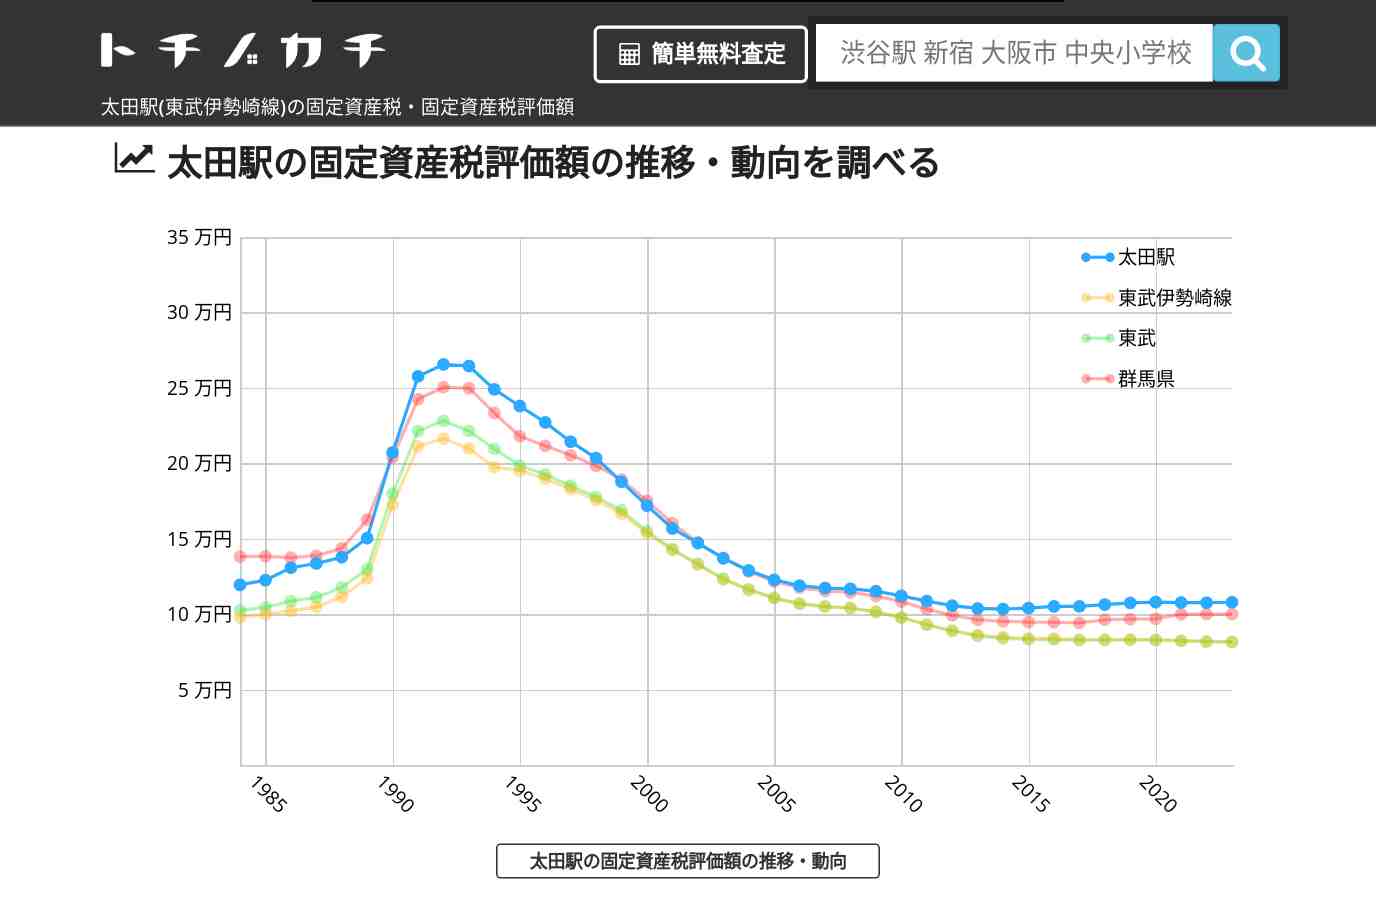 太田駅(東武伊勢崎線)の固定資産税・固定資産税評価額 | トチノカチ